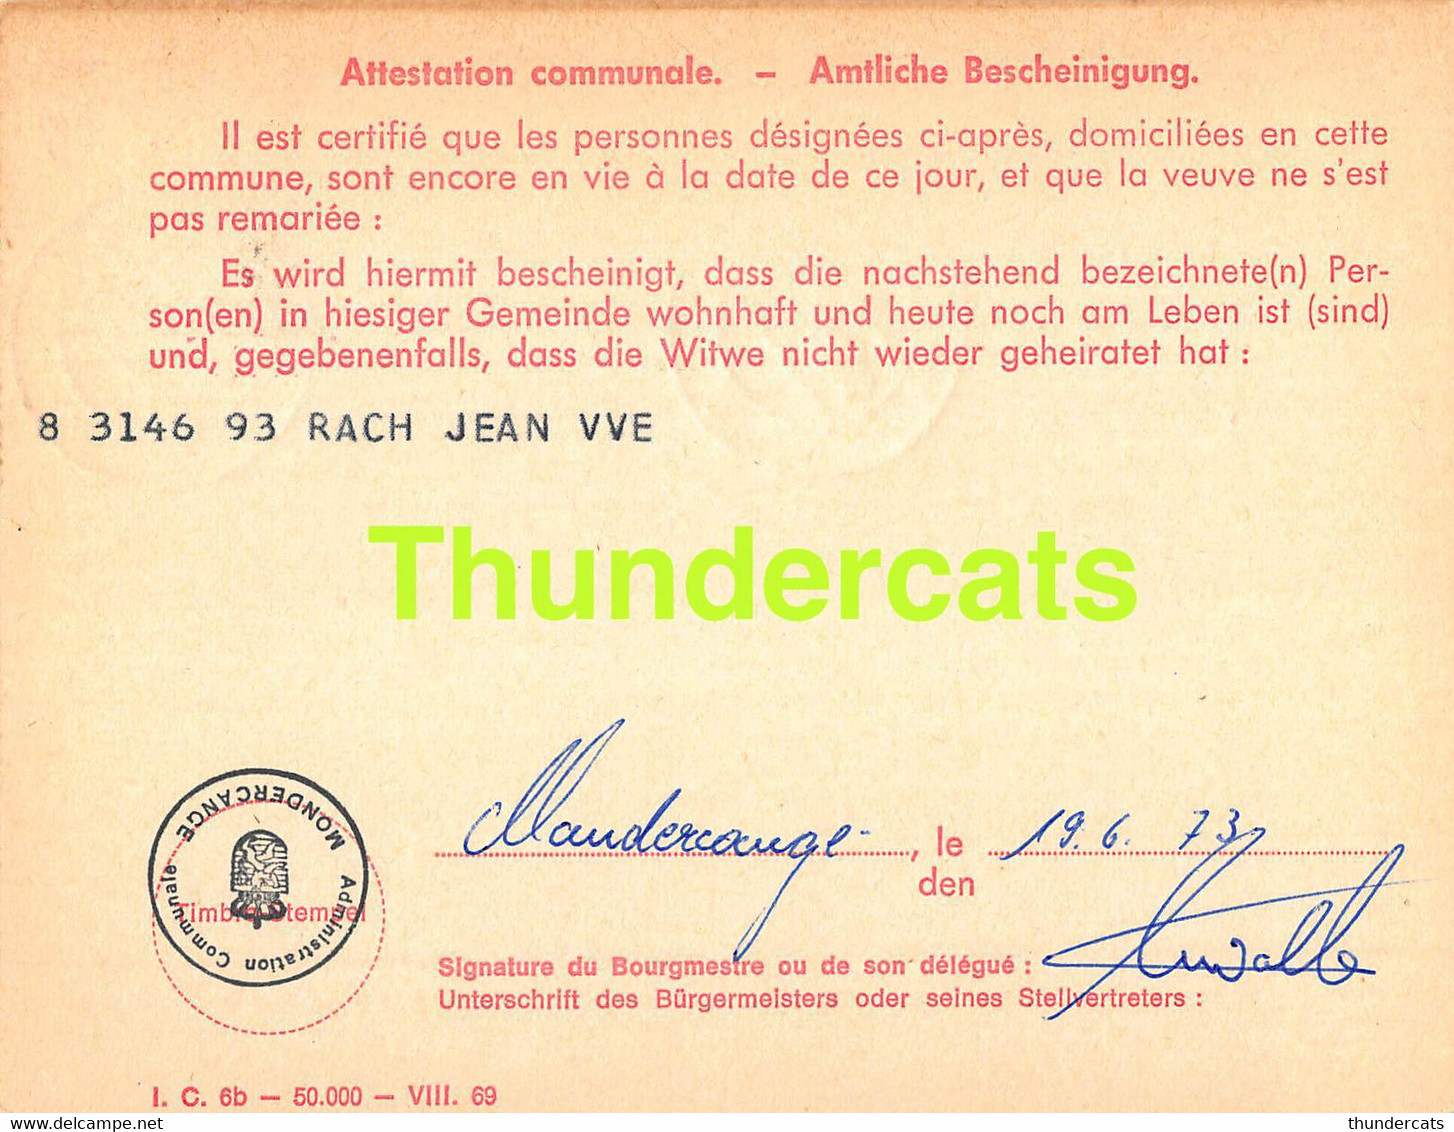 ASSURANCE VIEILLESSE INVALIDITE LUXEMBOURG 1973 MONDERCANGE RACH - Lettres & Documents